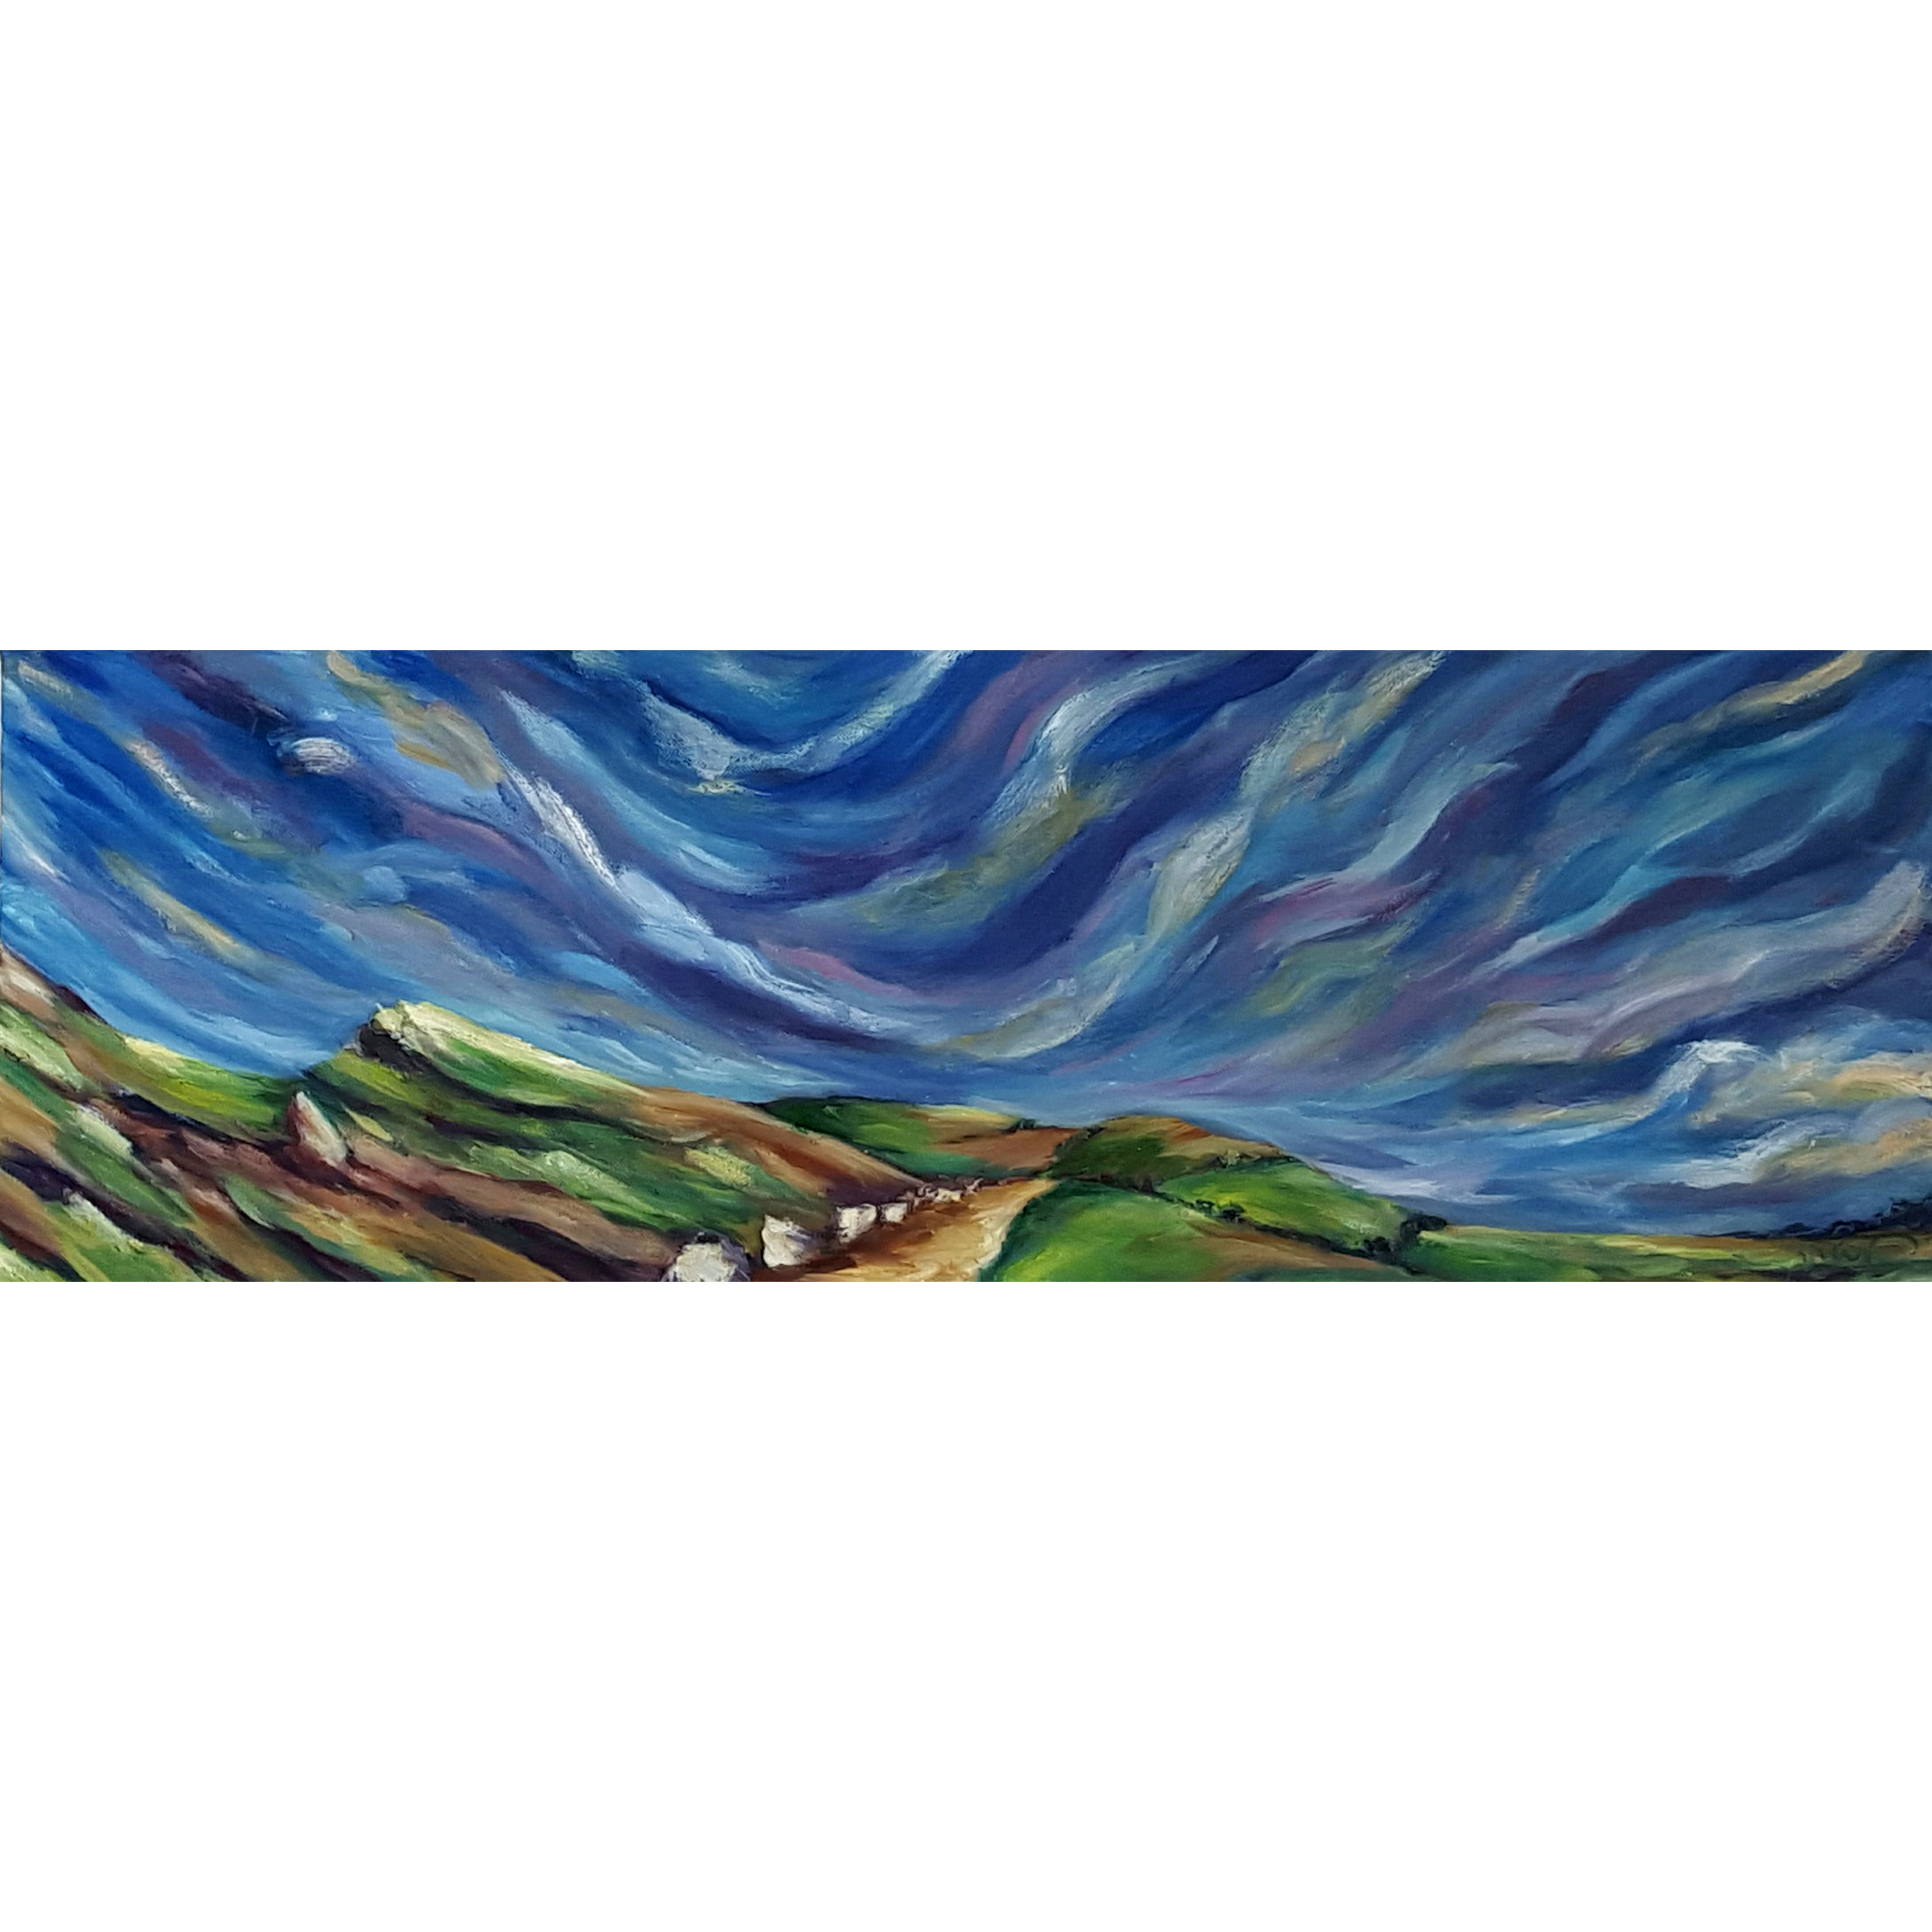 a Contemporary Irish landscape painting